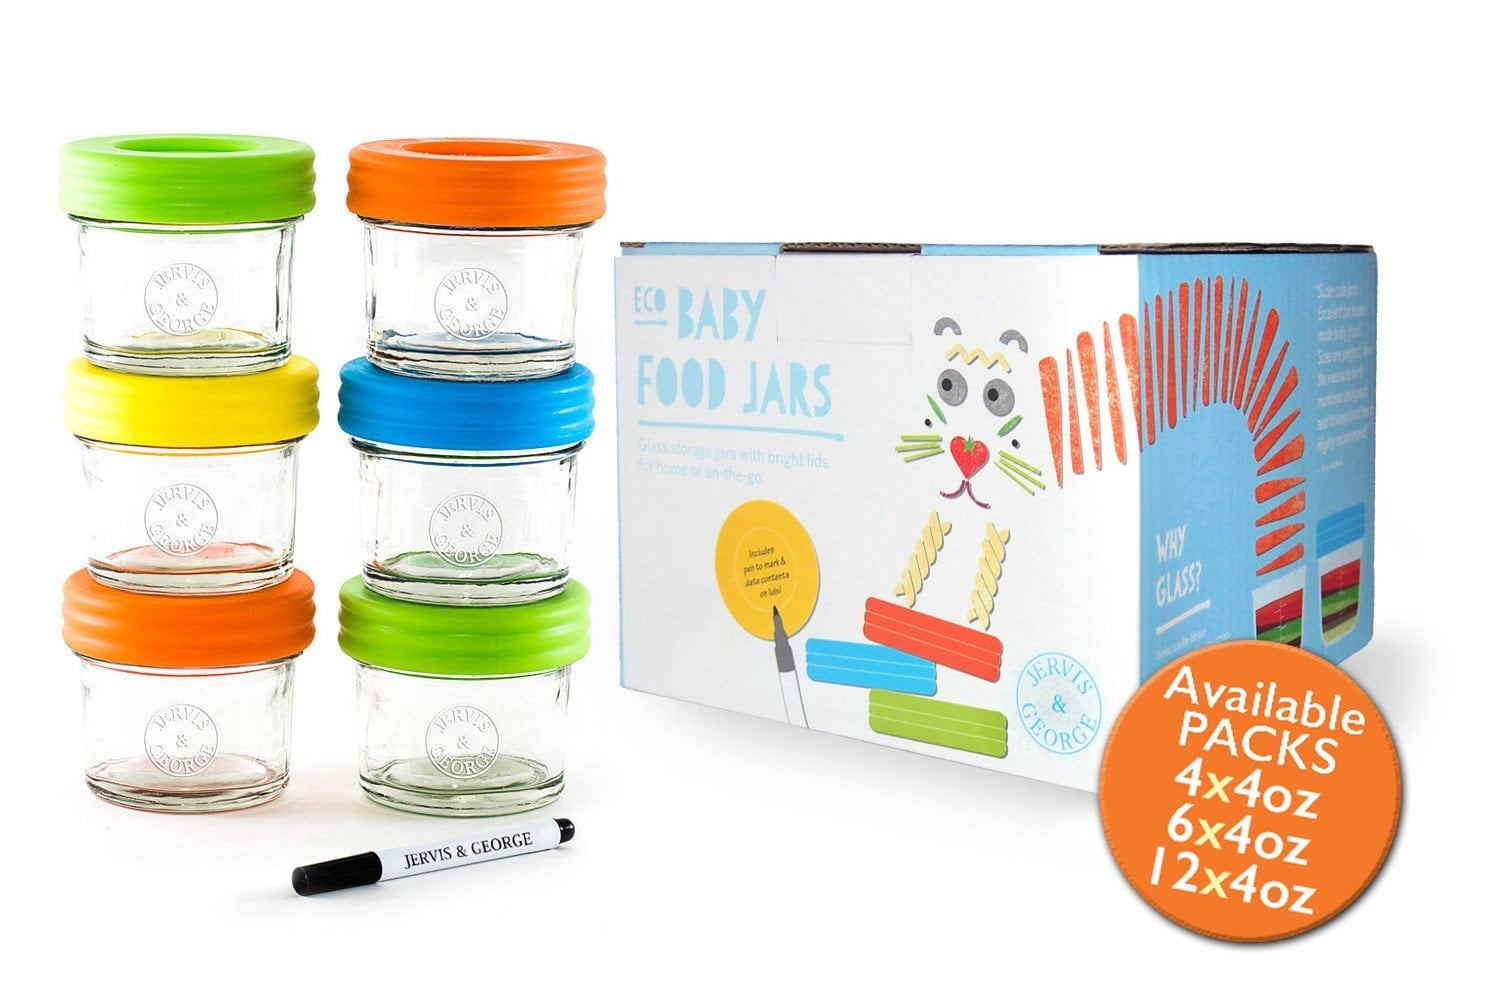 Jervis & George glass baby food jars